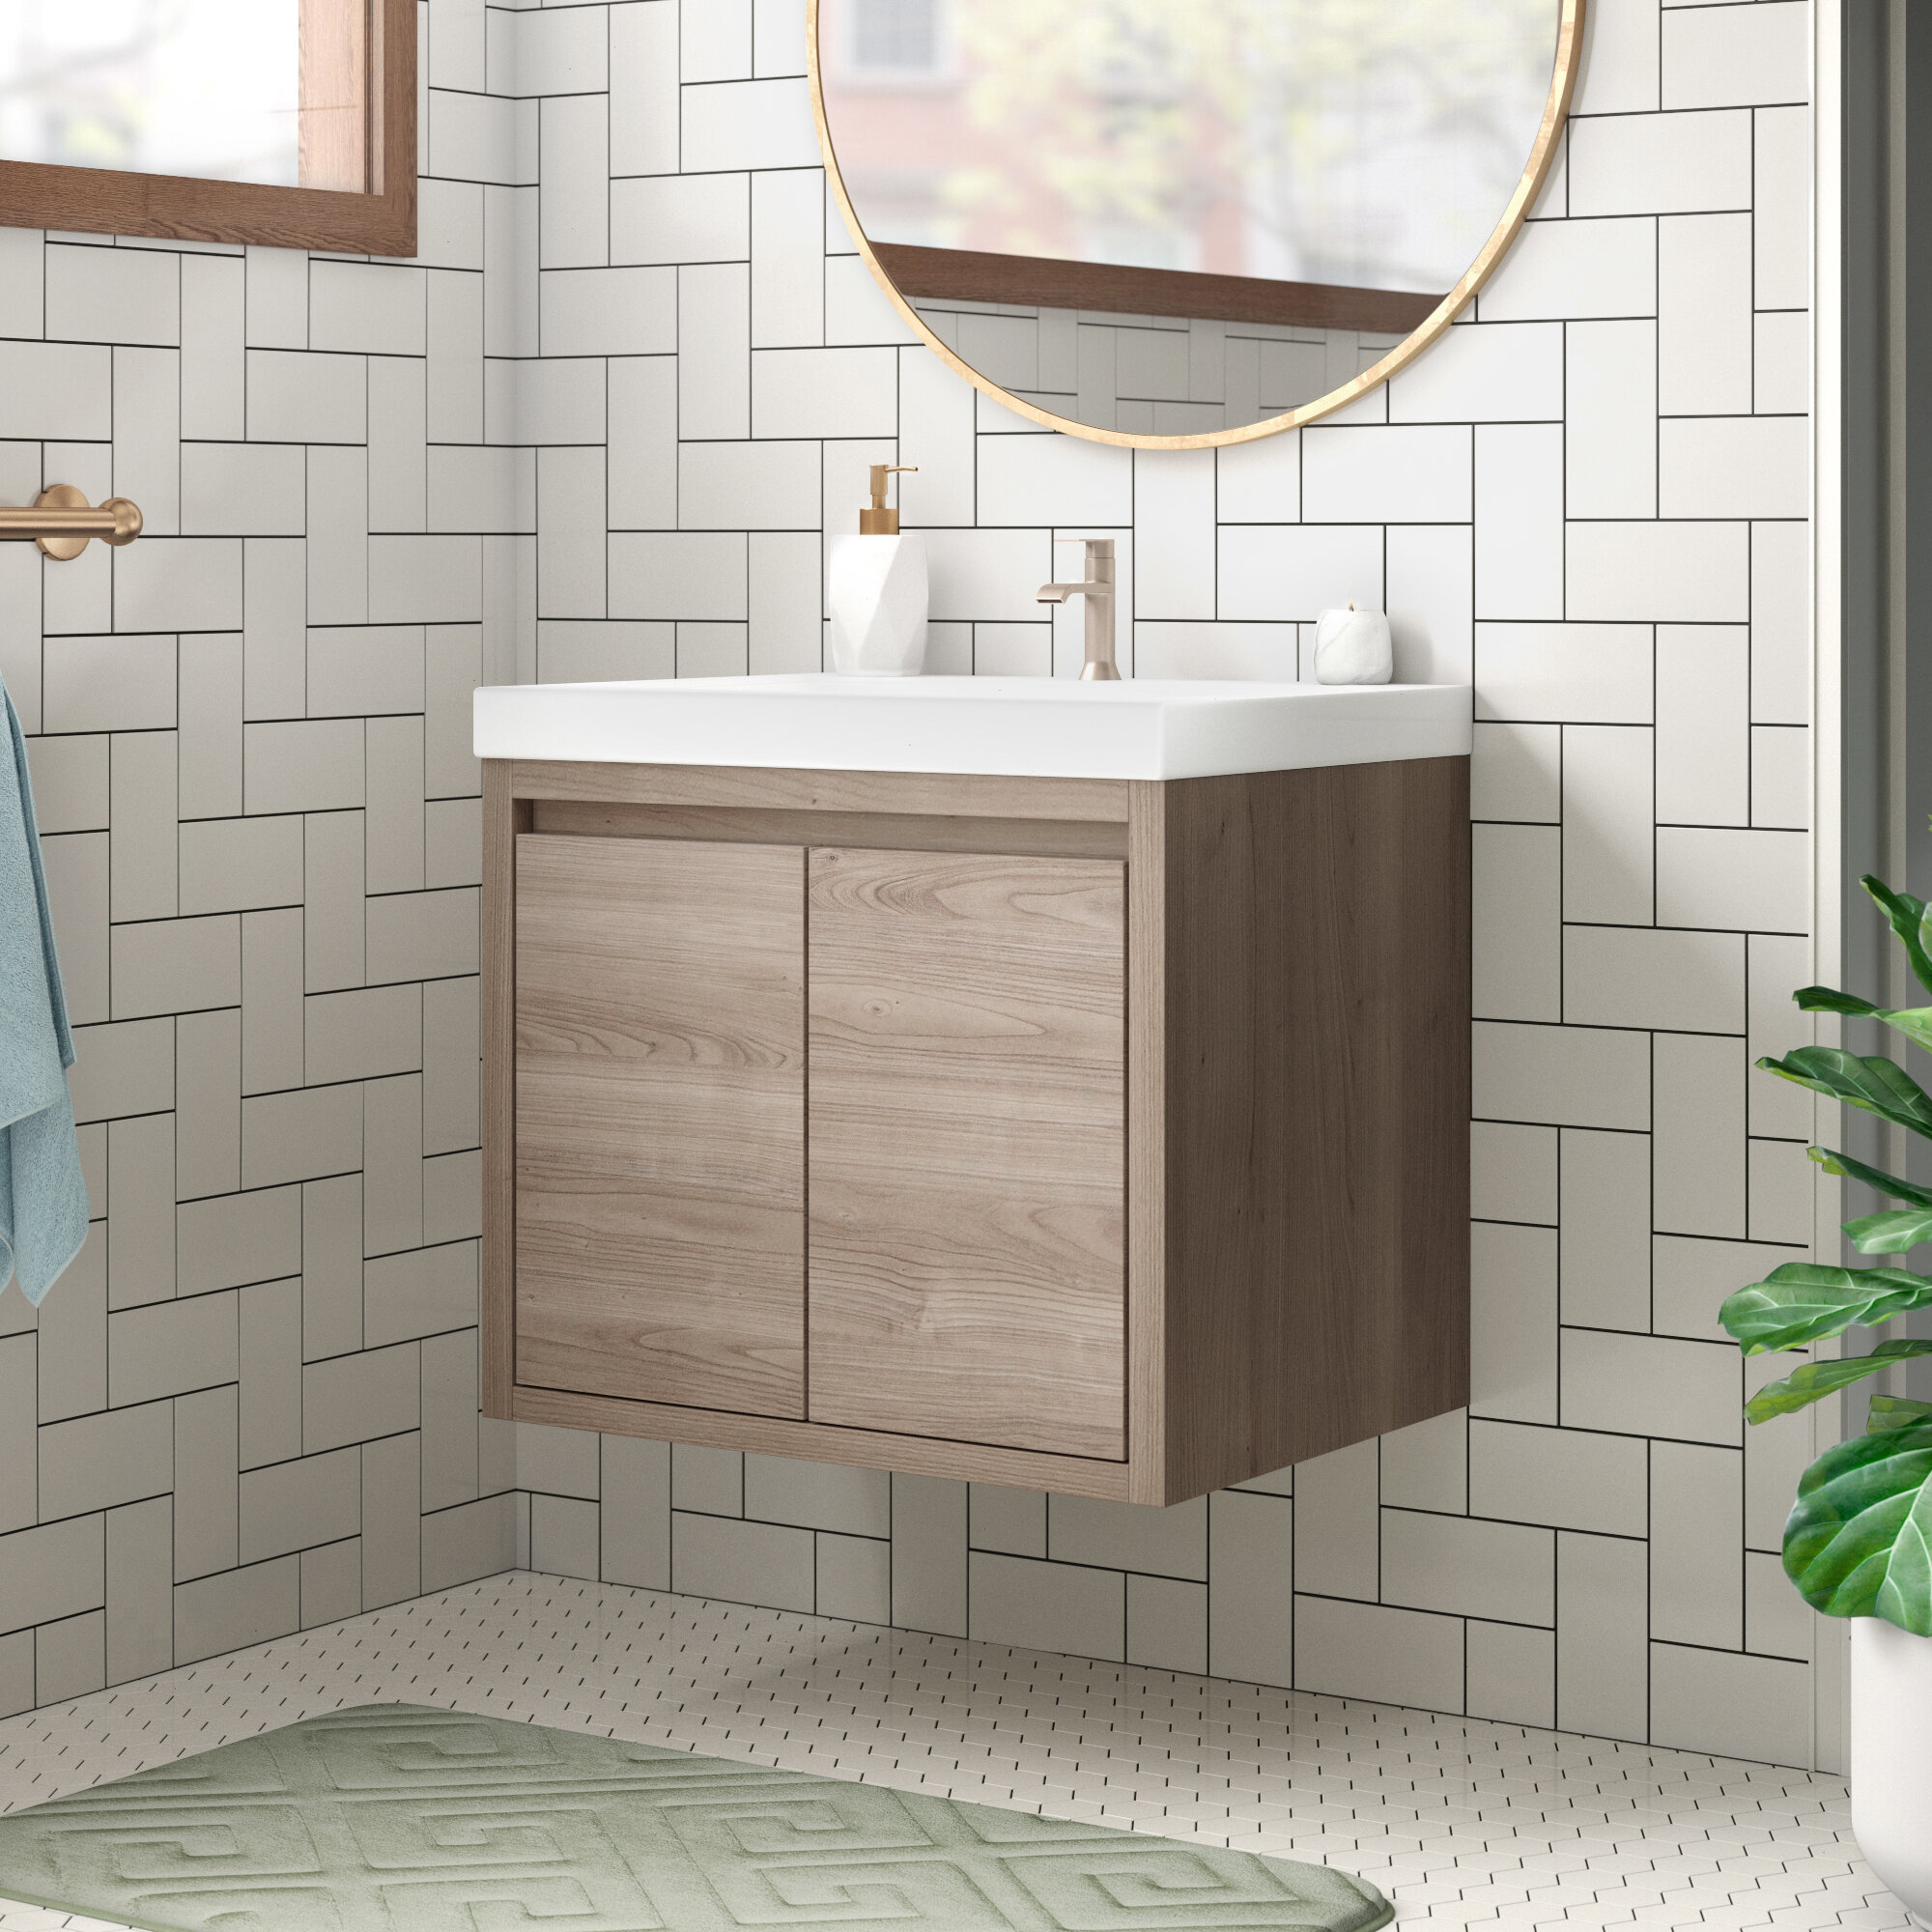 20" Bathroom Vanity Set with Mirror Single Sink Modern Wall Mount Cabinet table